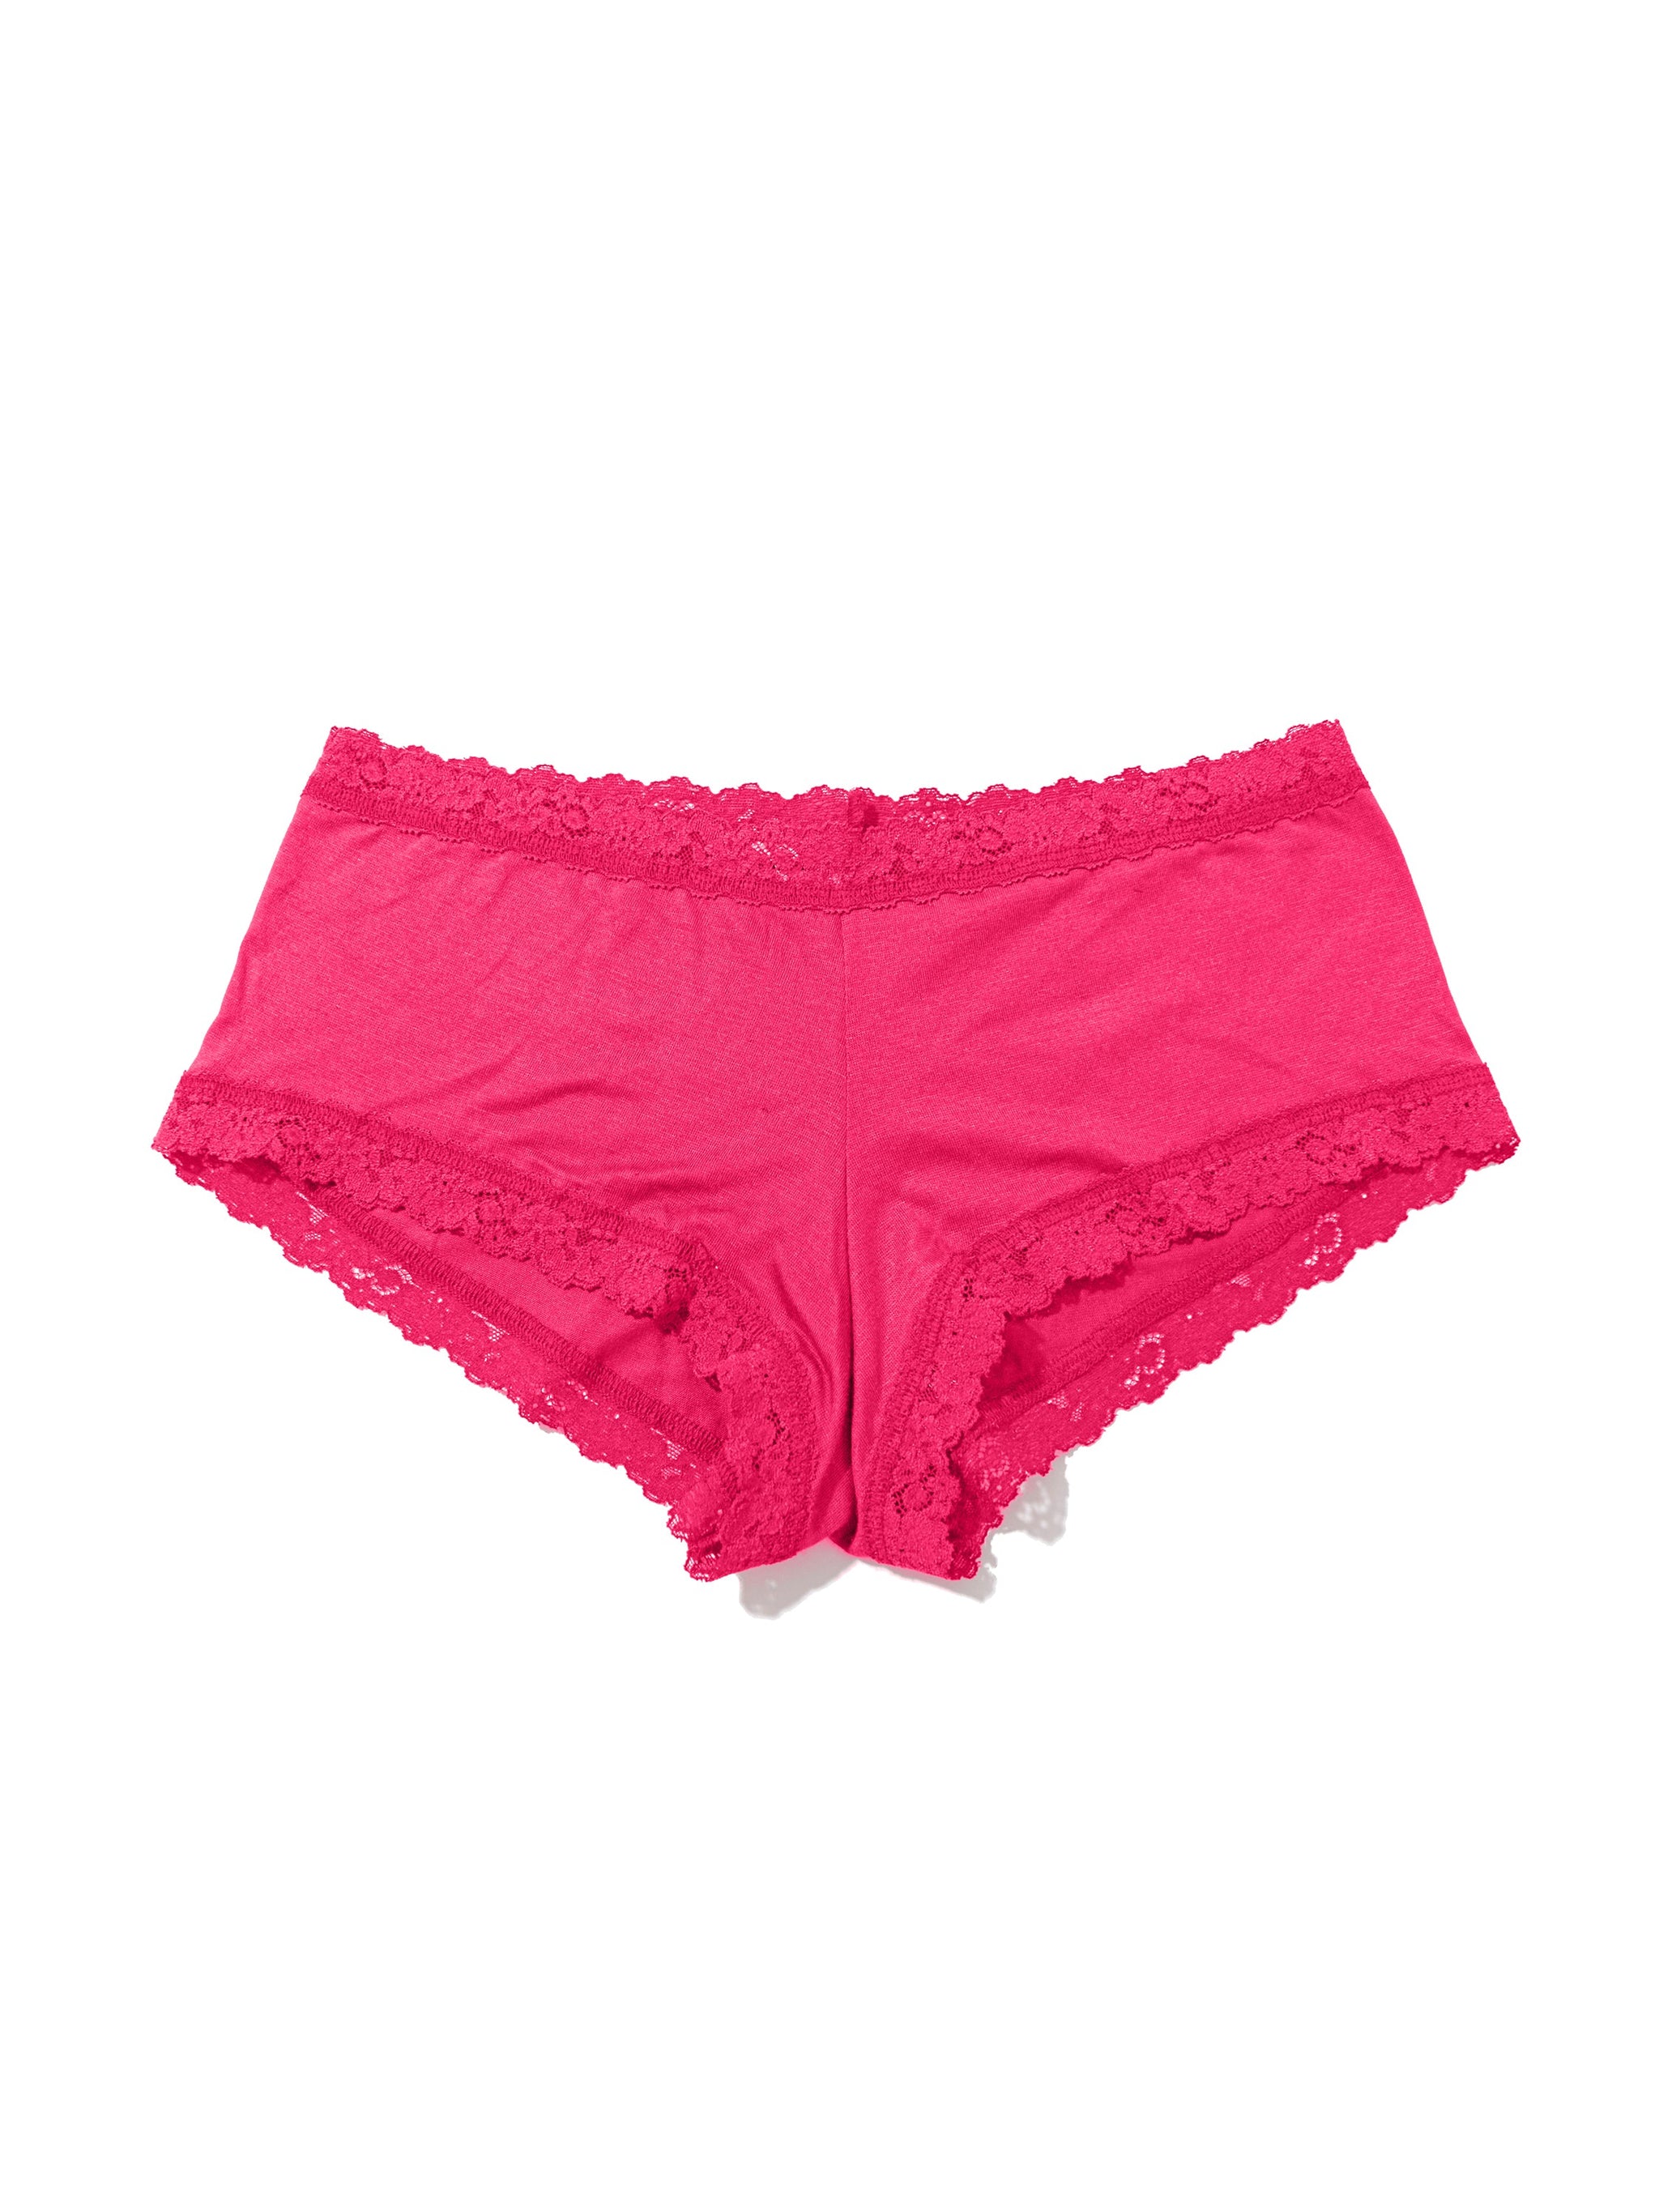 Buy Naughty Boy Shorts Panties for Bad Girls - Sexy Funny Novelty